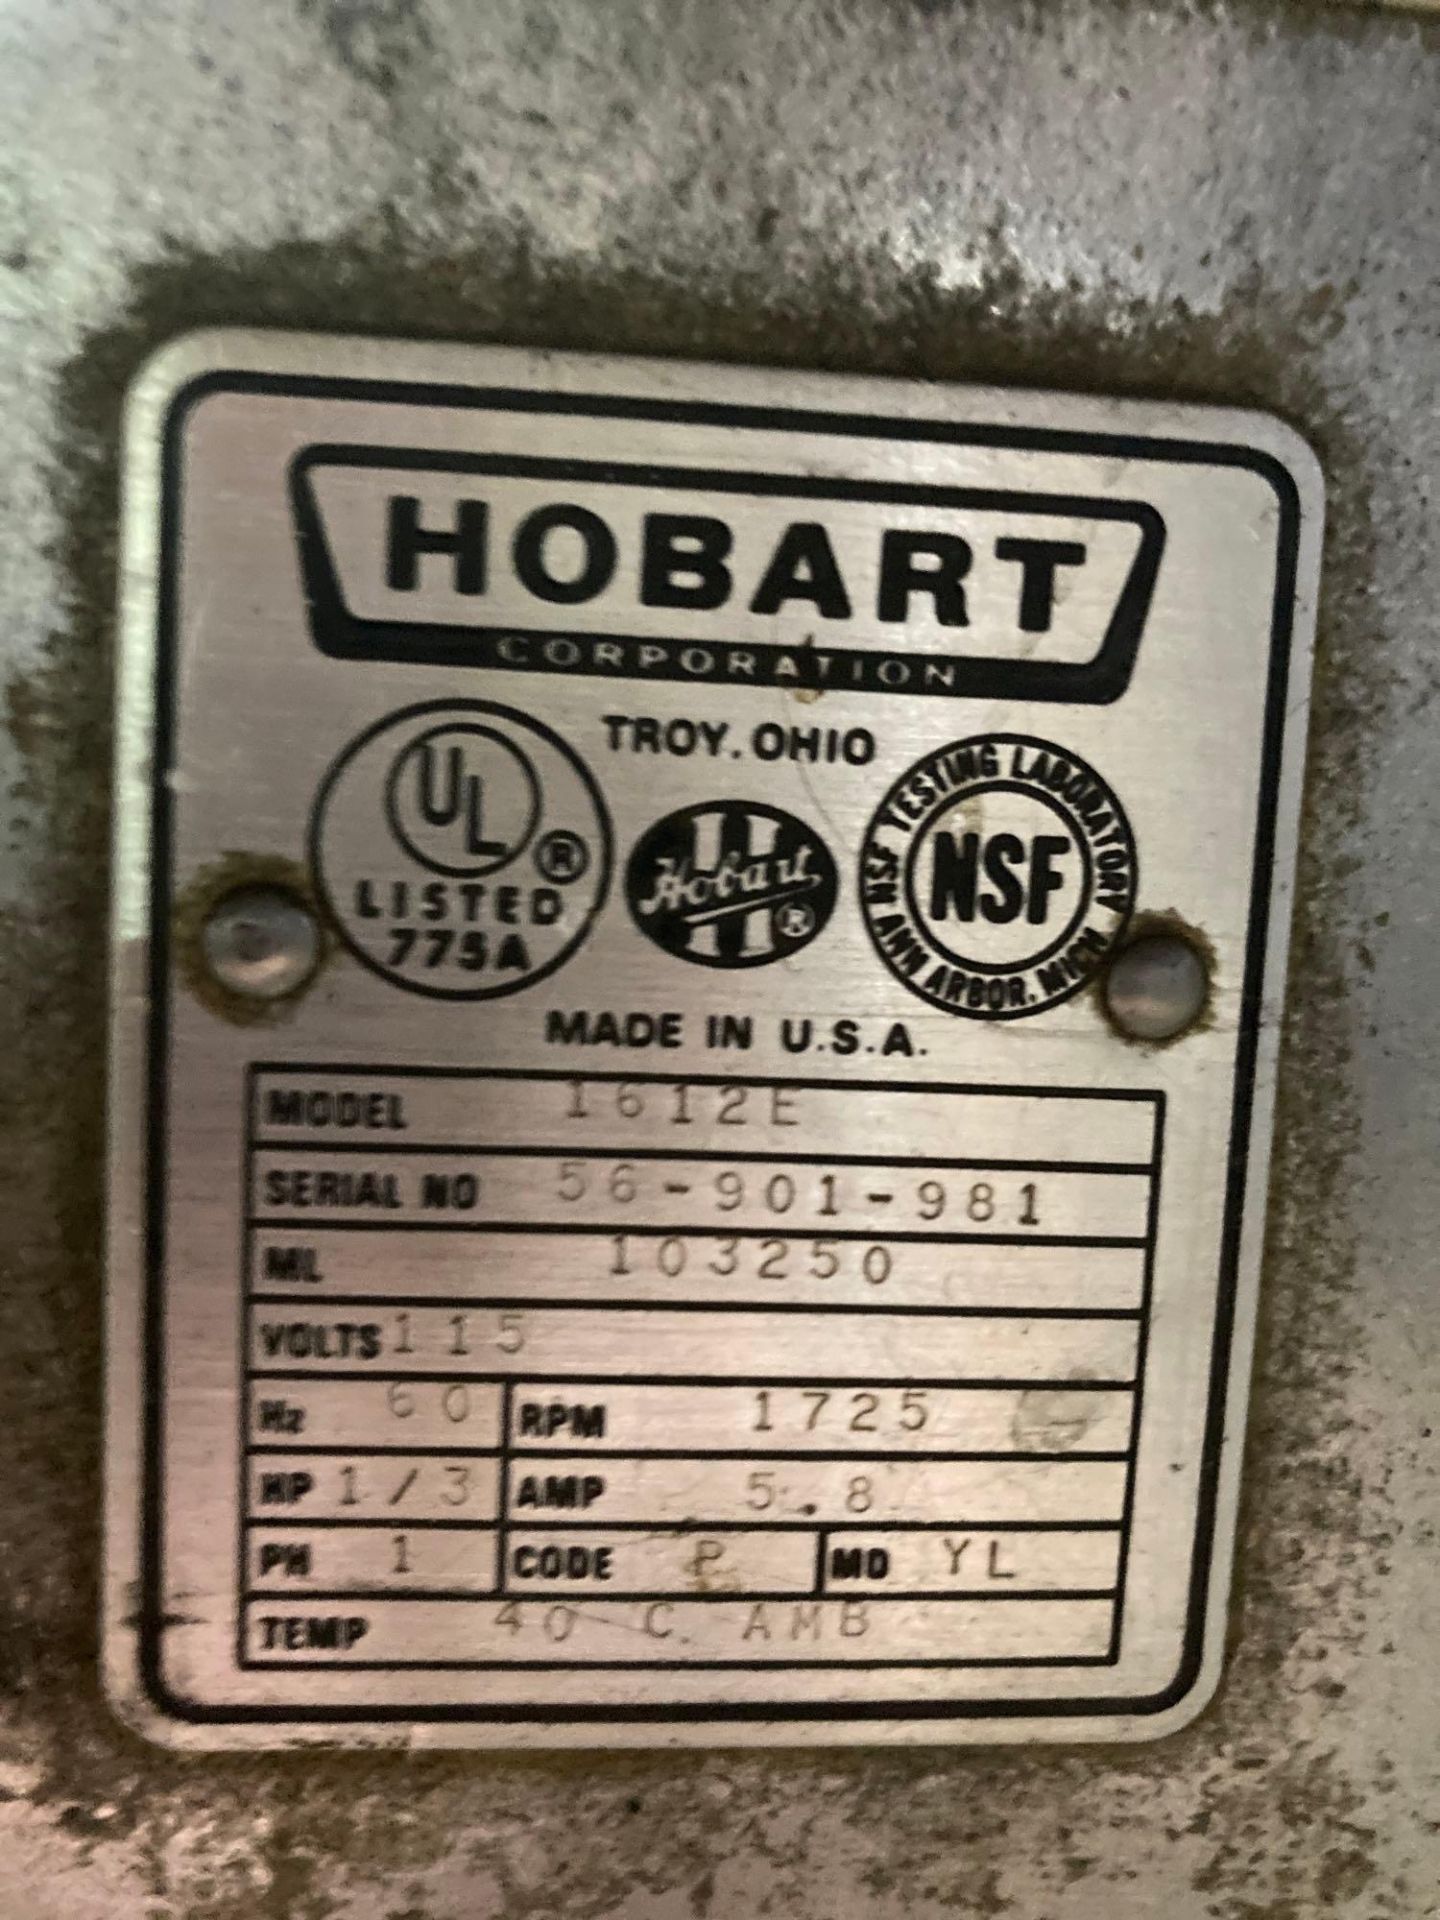 Hobart 1612E Tabletop Stainless Steel Slicer - Image 4 of 4